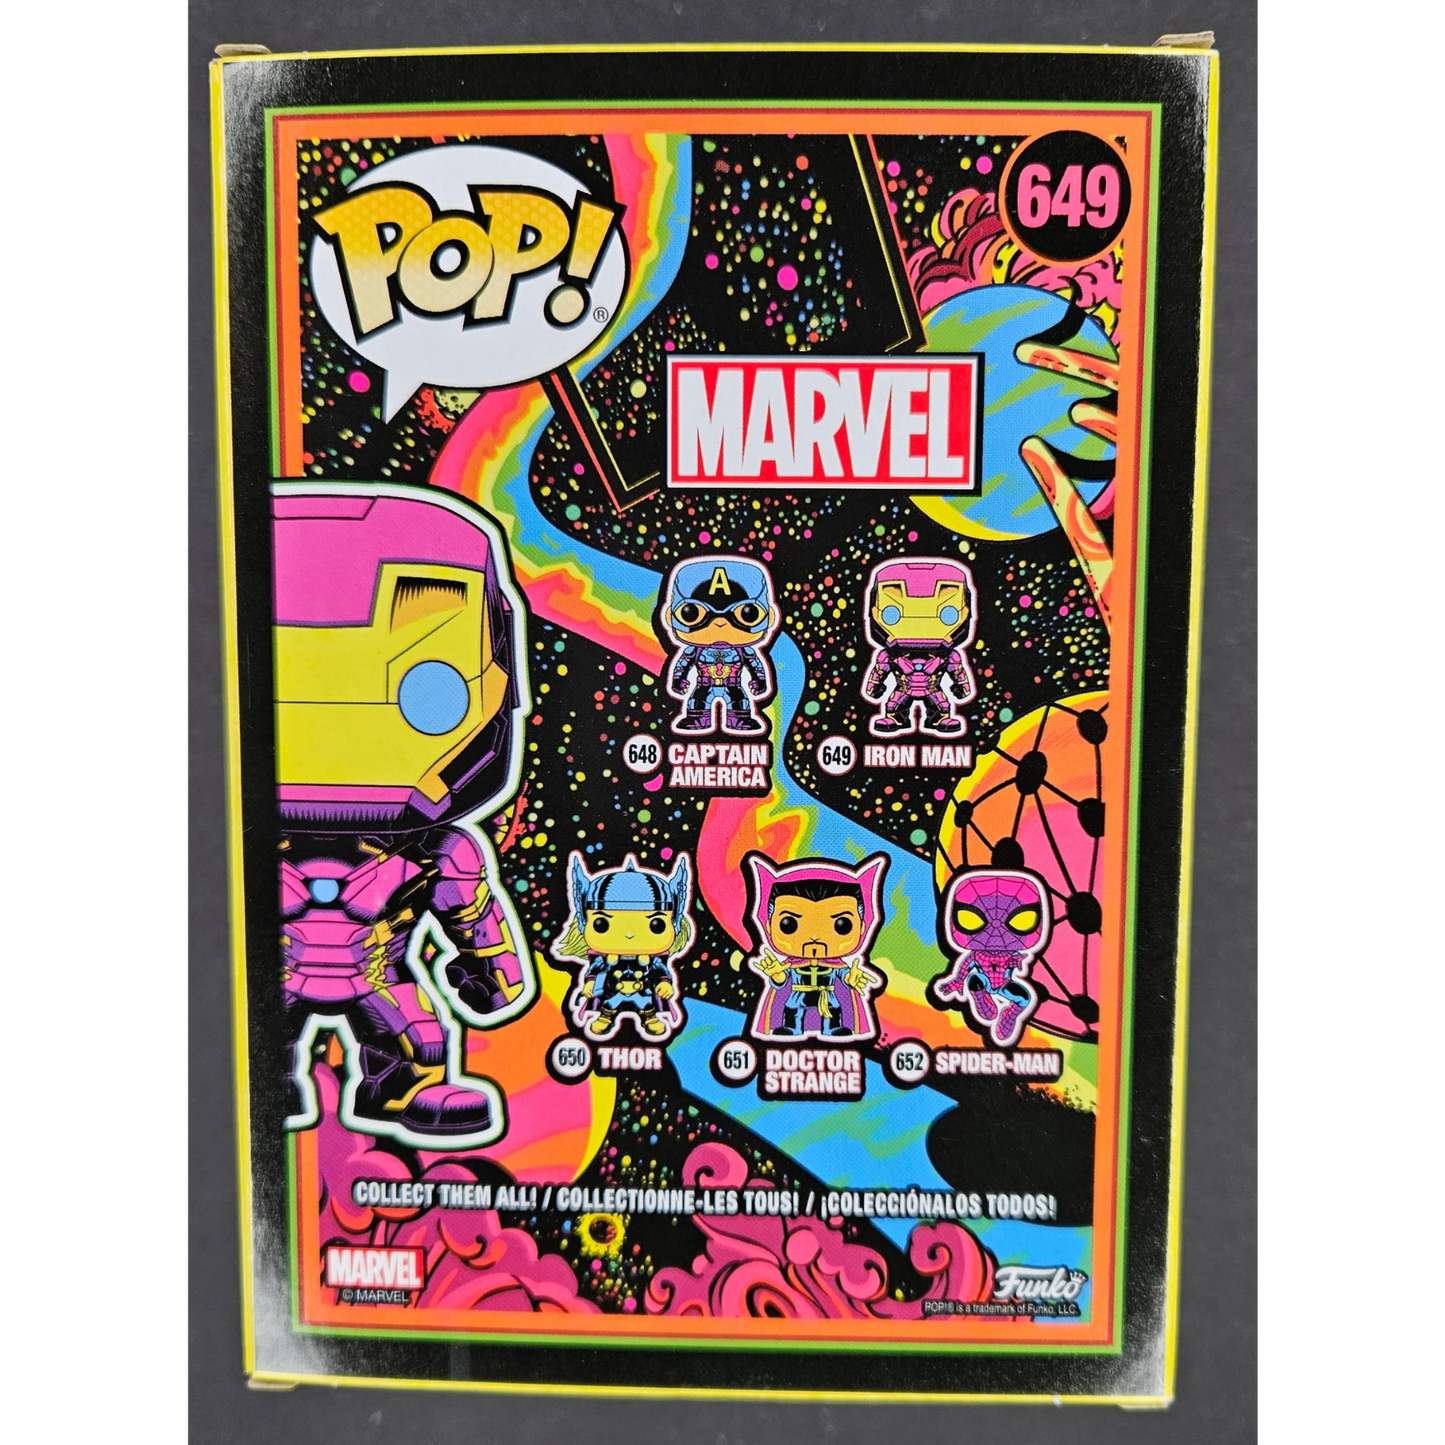 Iron Man Funko Pop! Marvel #659 Special Edition